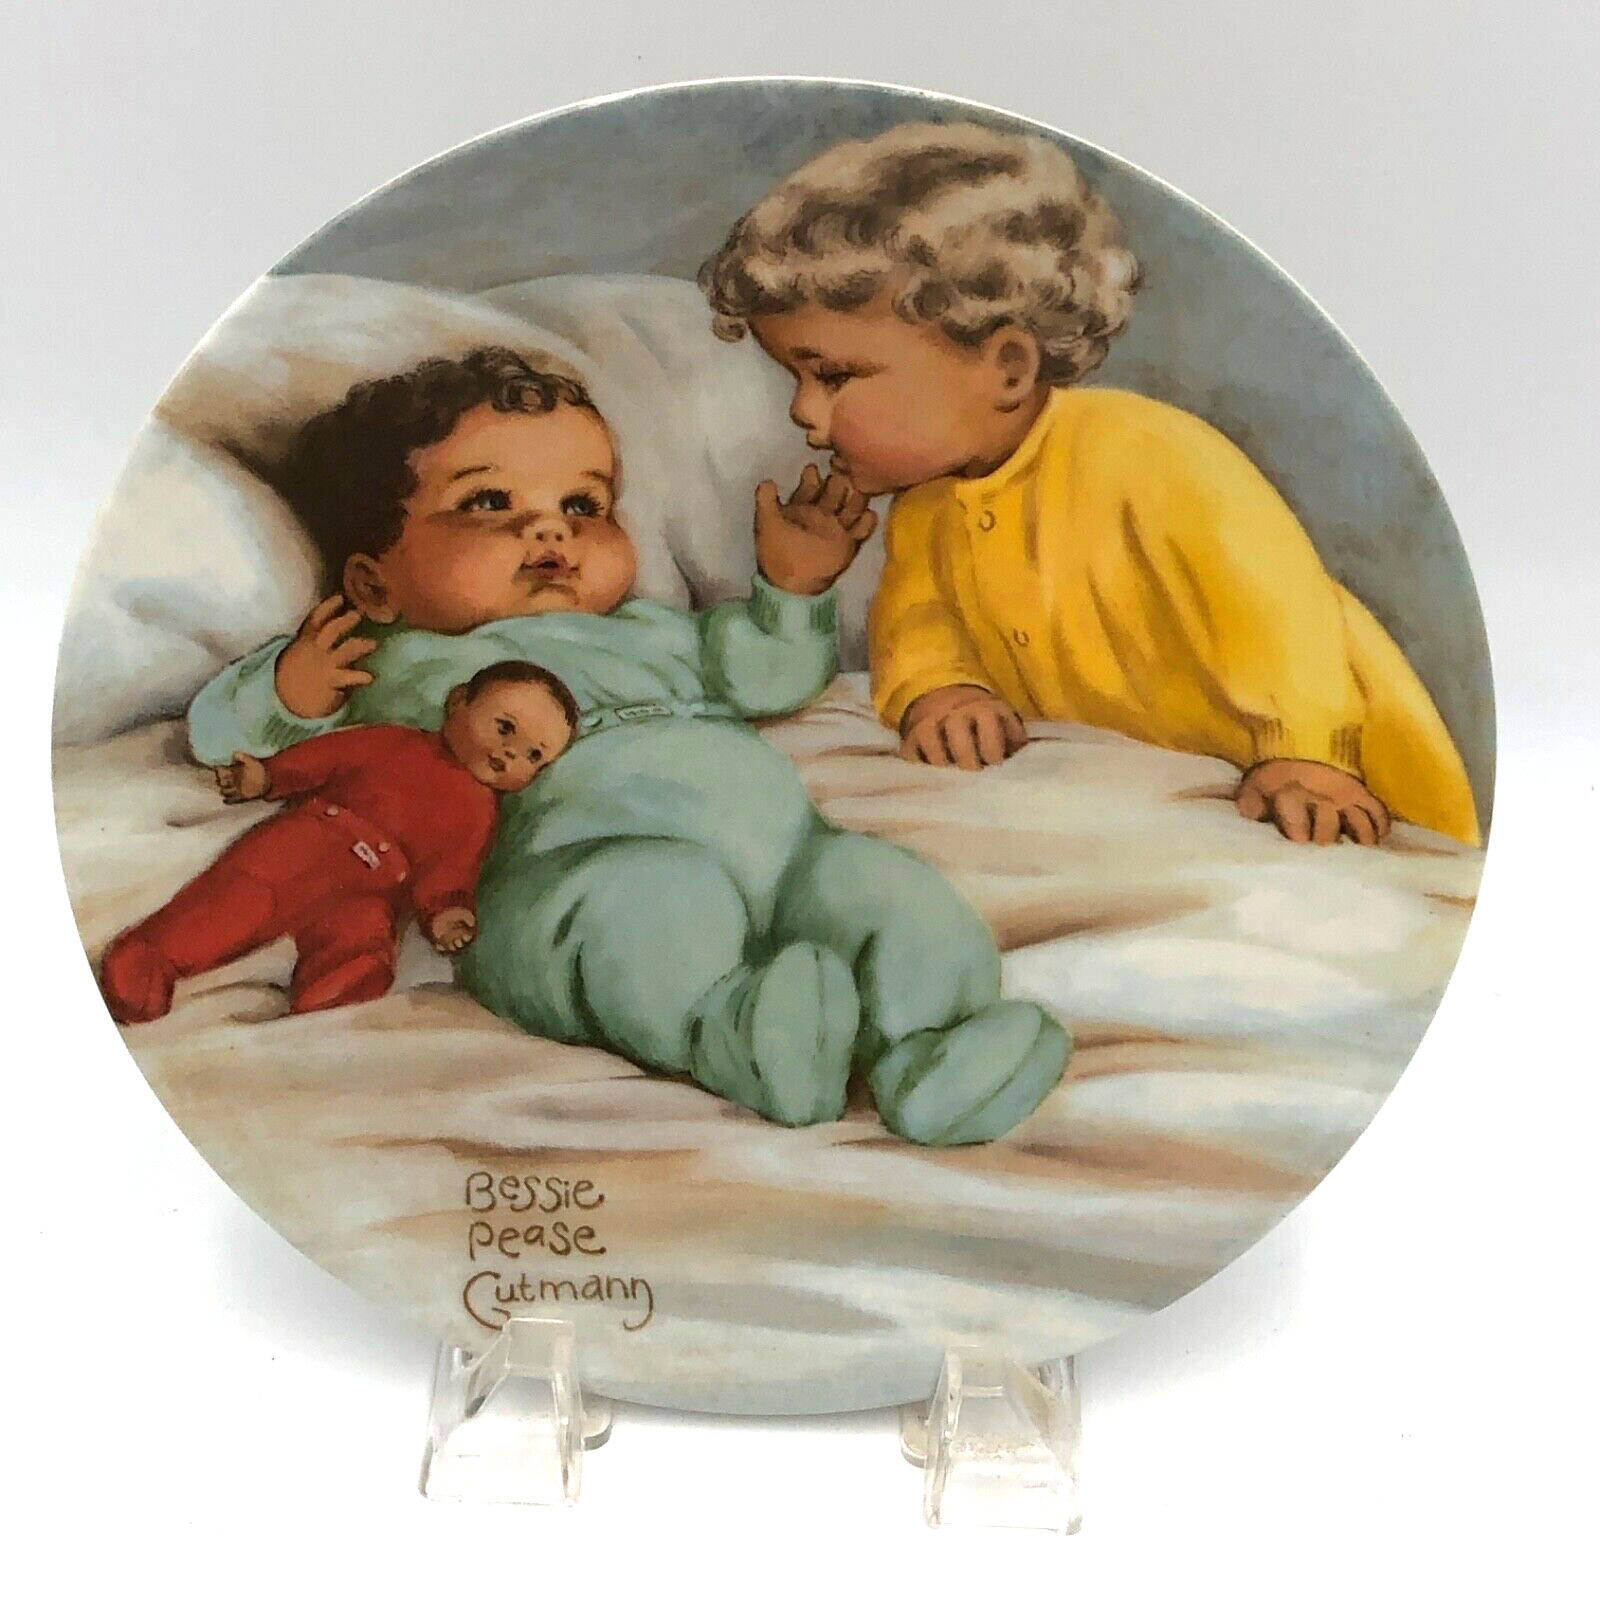  Collector Plate 1985 Bessie Pease Gutmann “My Baby” #102 Vtg. 3rd Issue